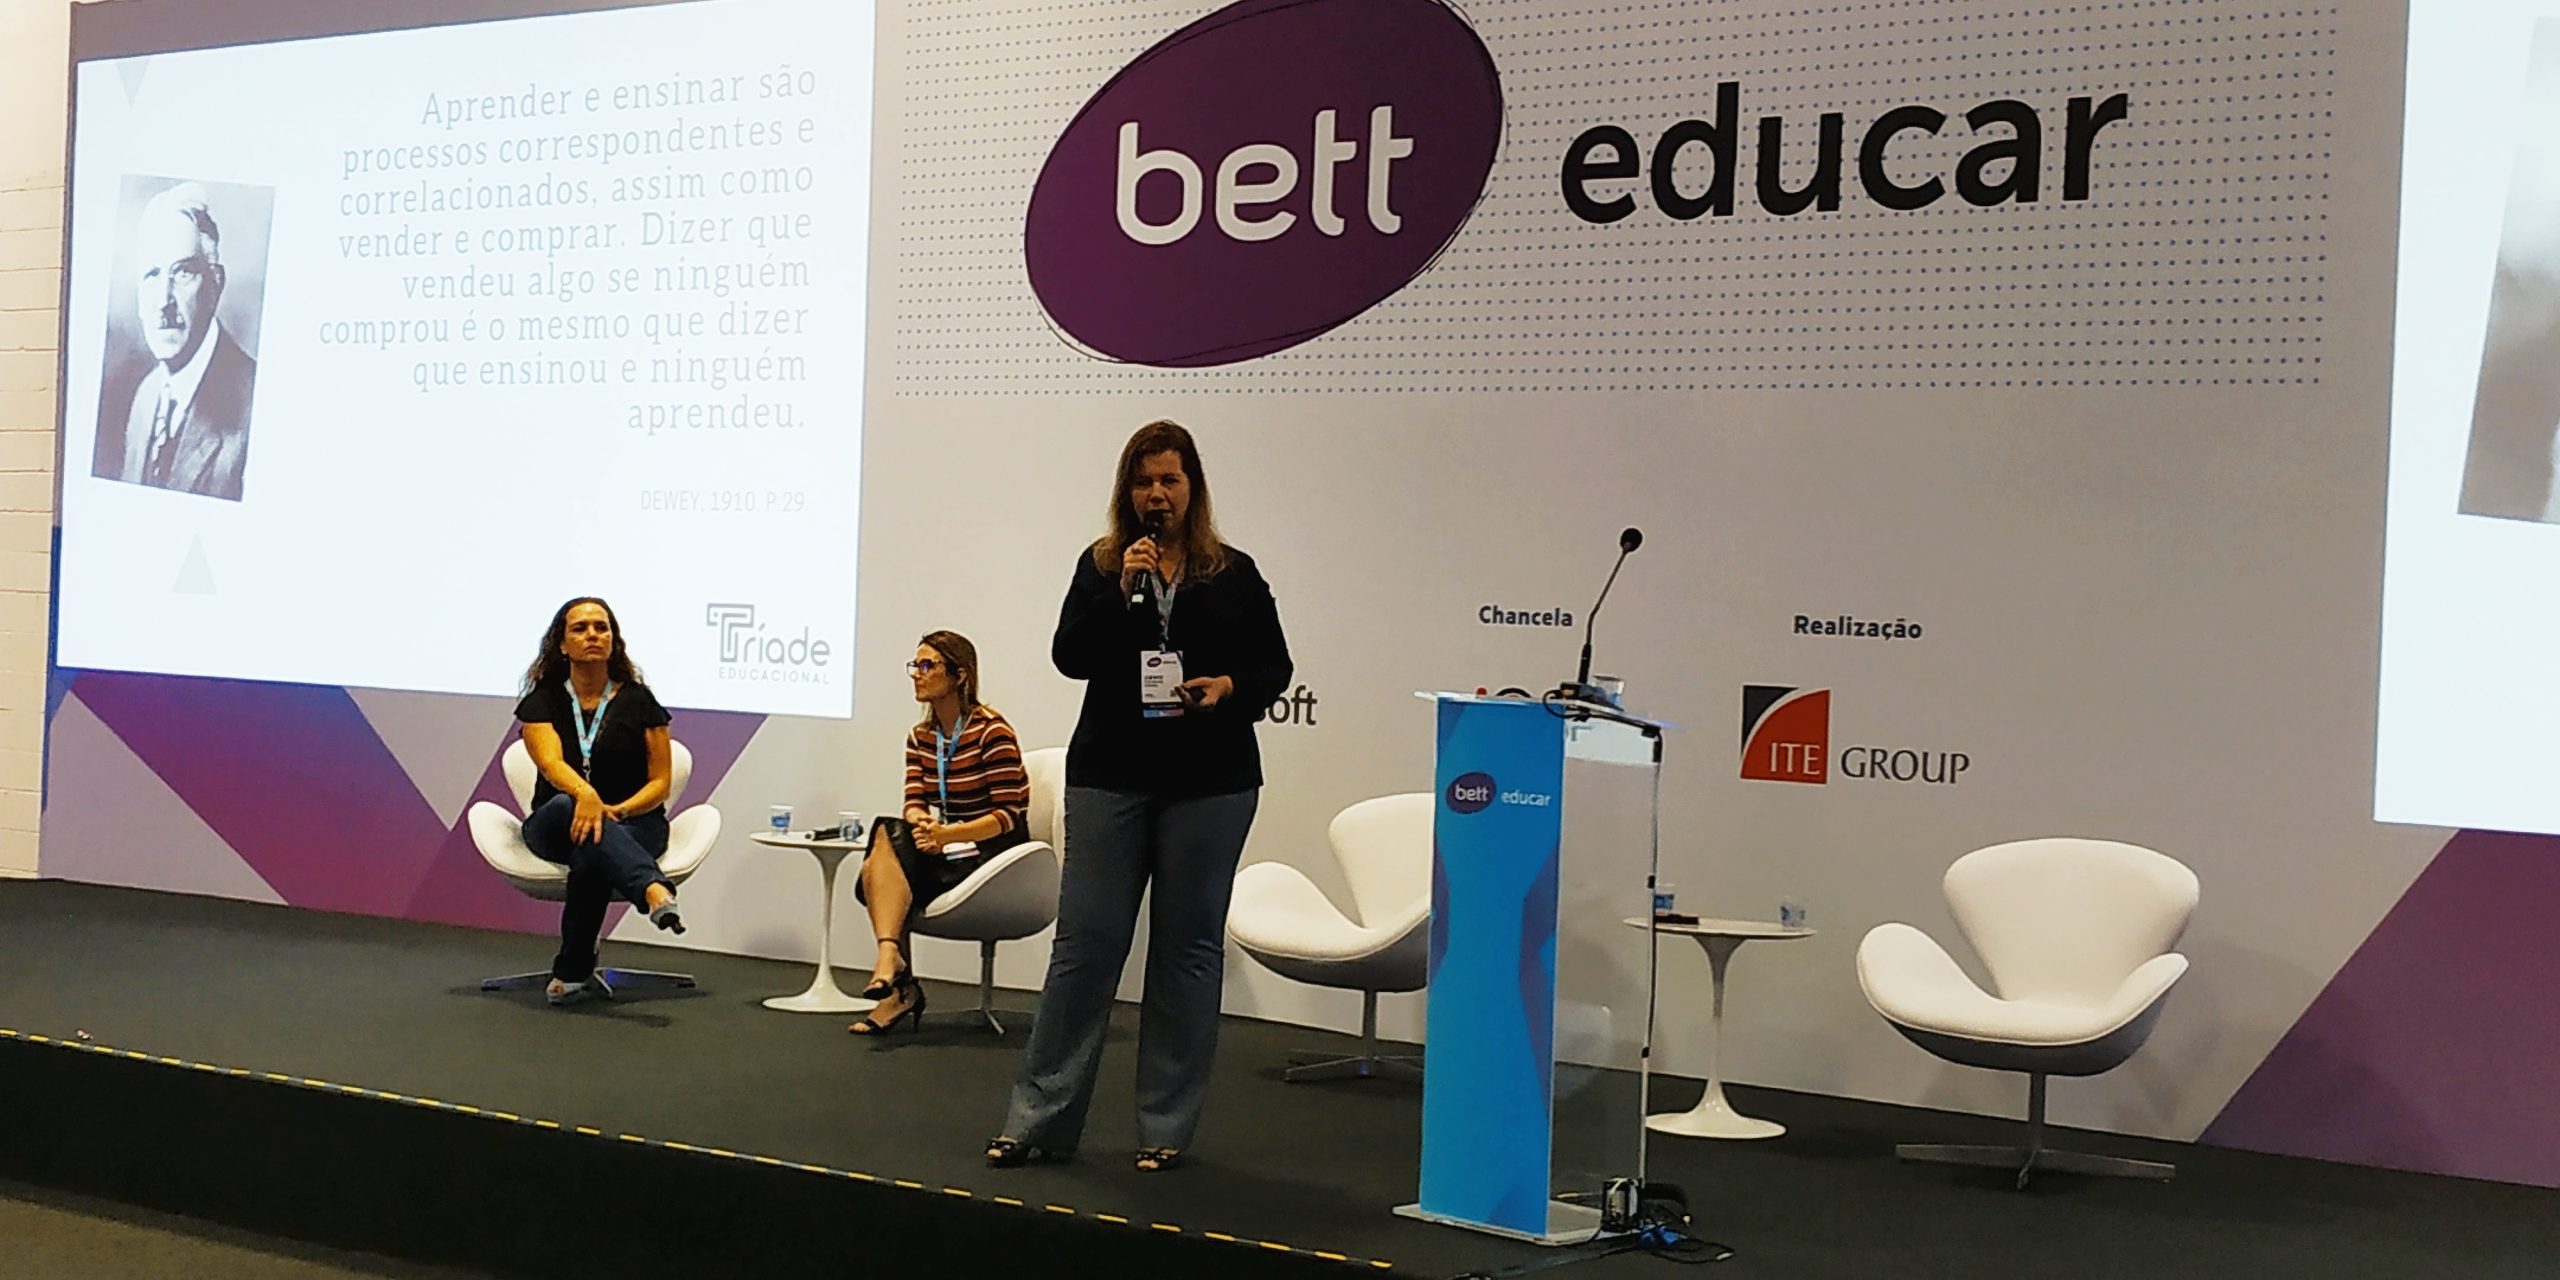 Lilian Bacich metodologias ativas Bett Educar 2019 Geekie